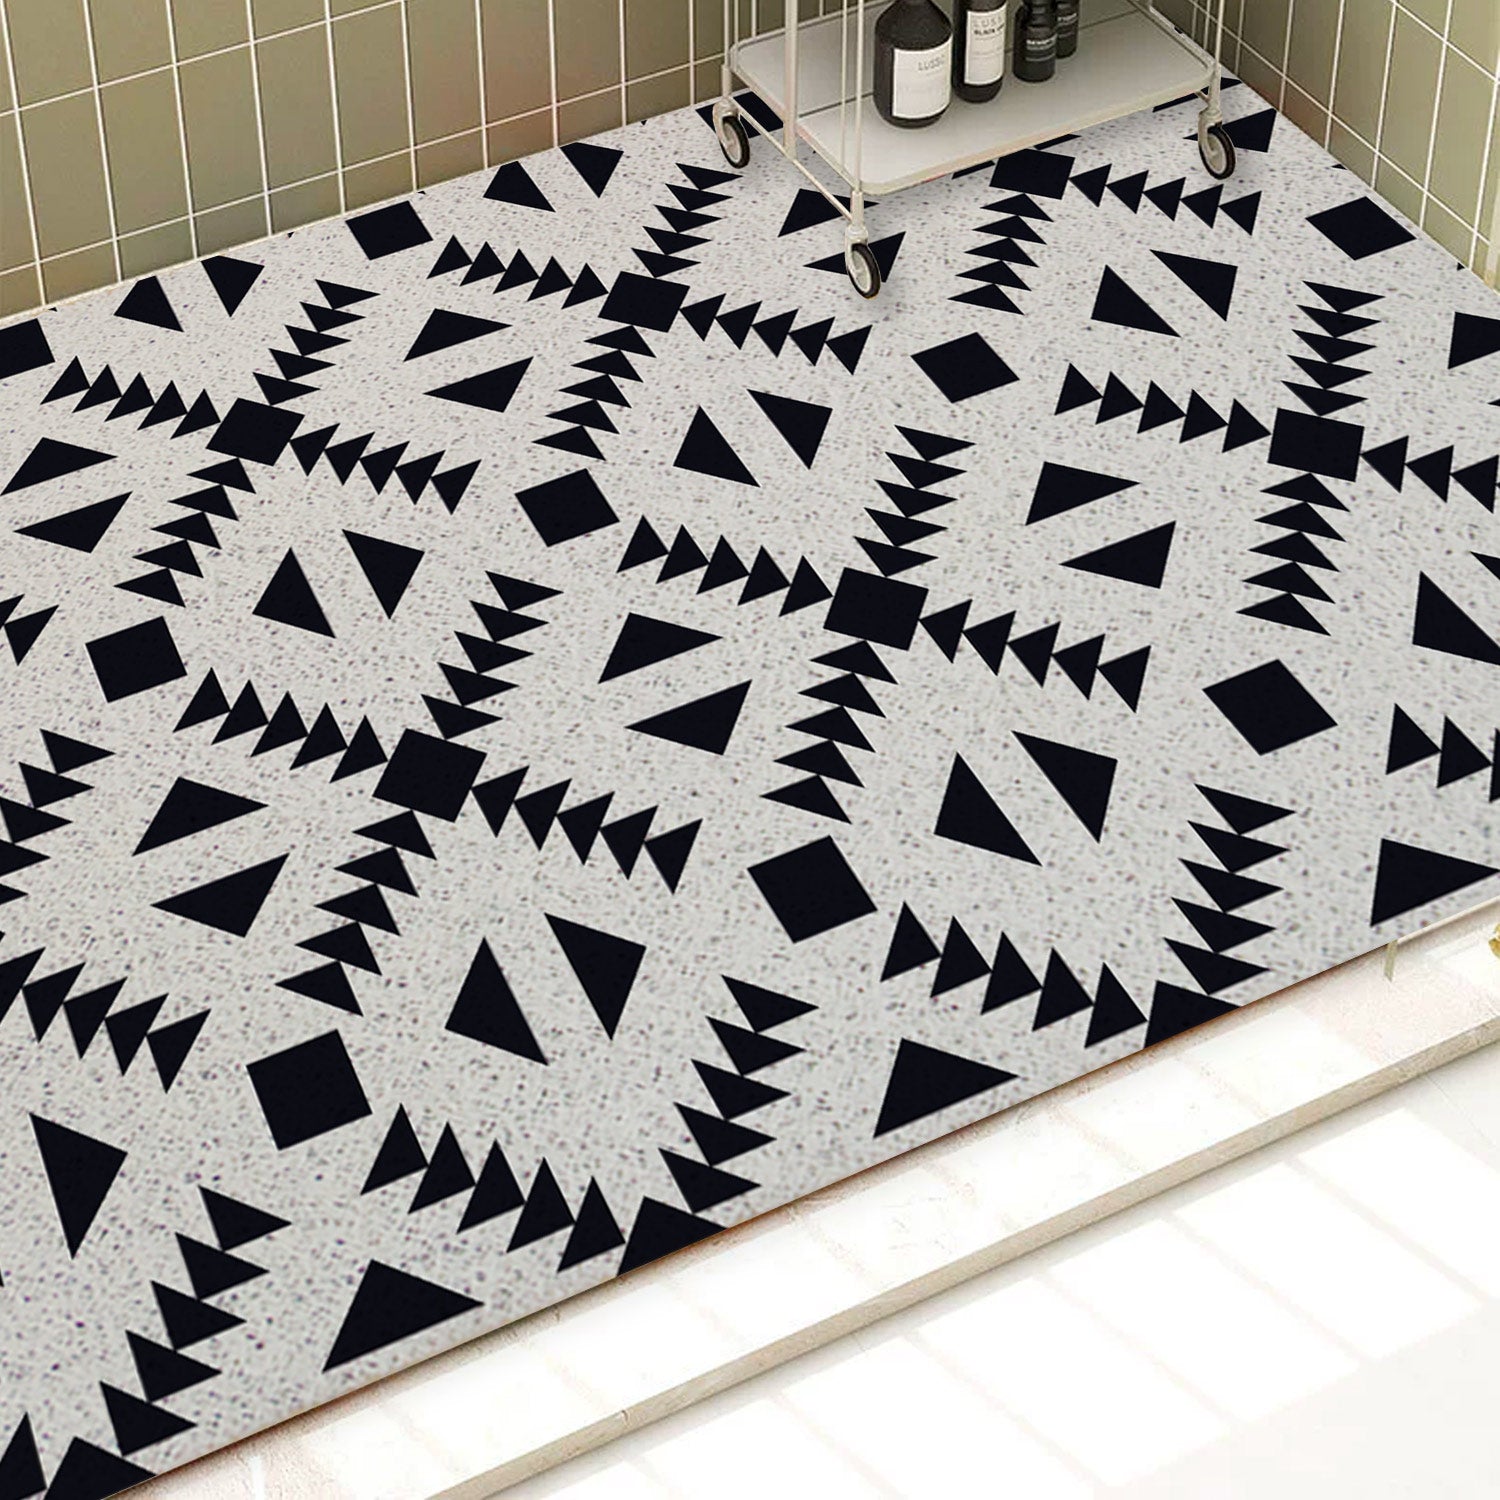 Feblilac Black and White PVC Coil Bathtub Mat, Diamond Pattern Shower Mat, Anti-Slip Mat for Bath Tub